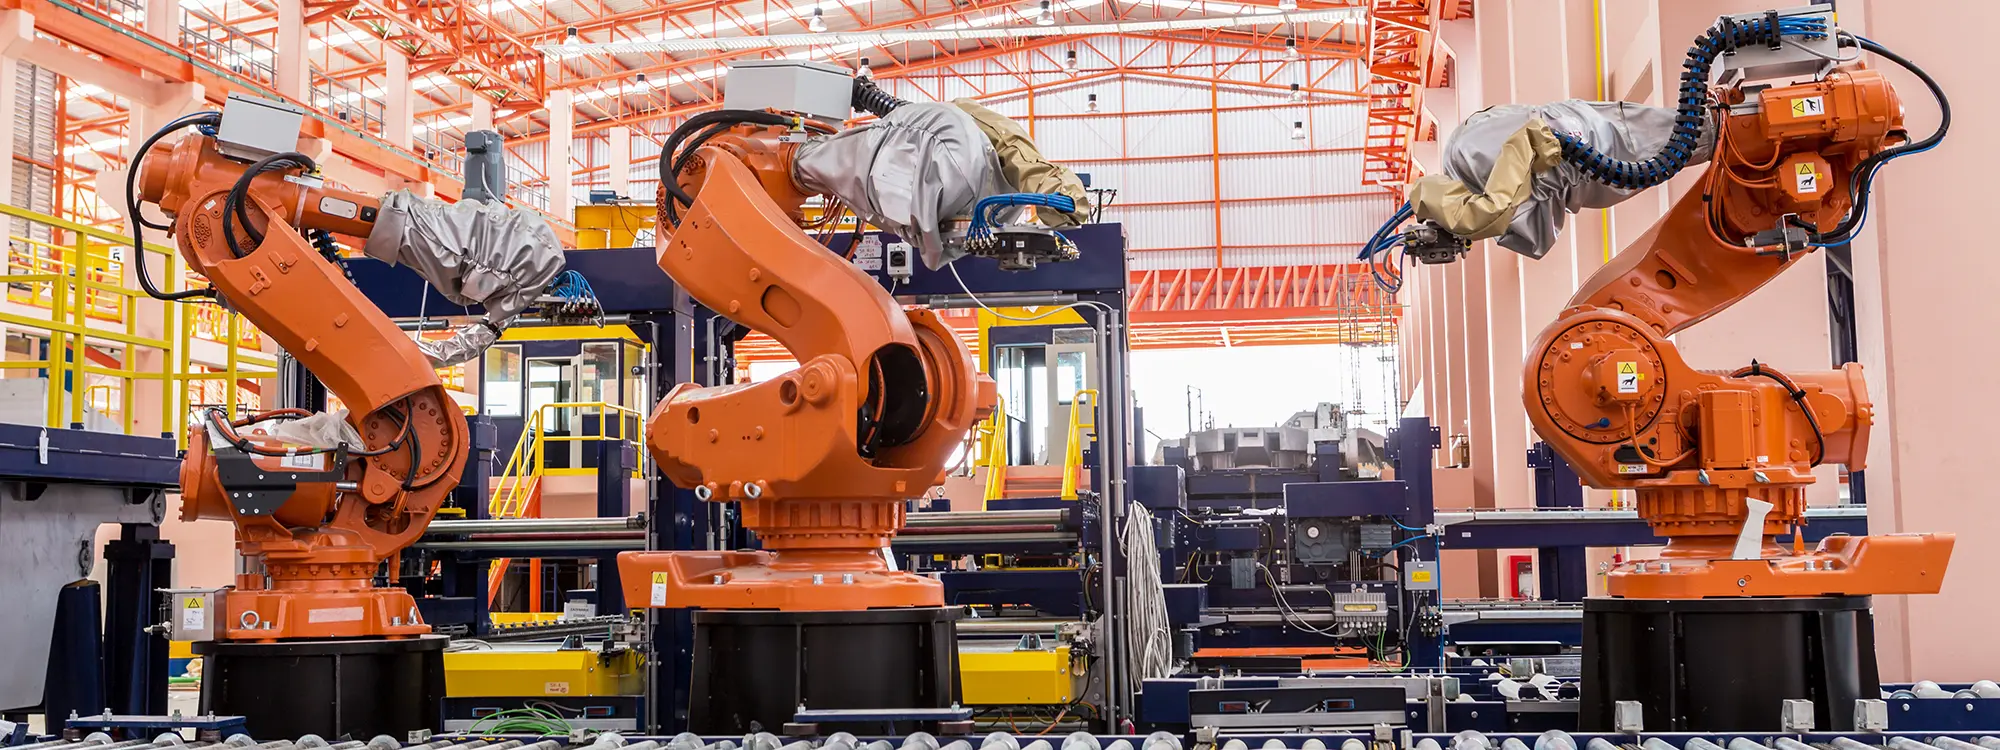 Robotic arms manufacturing